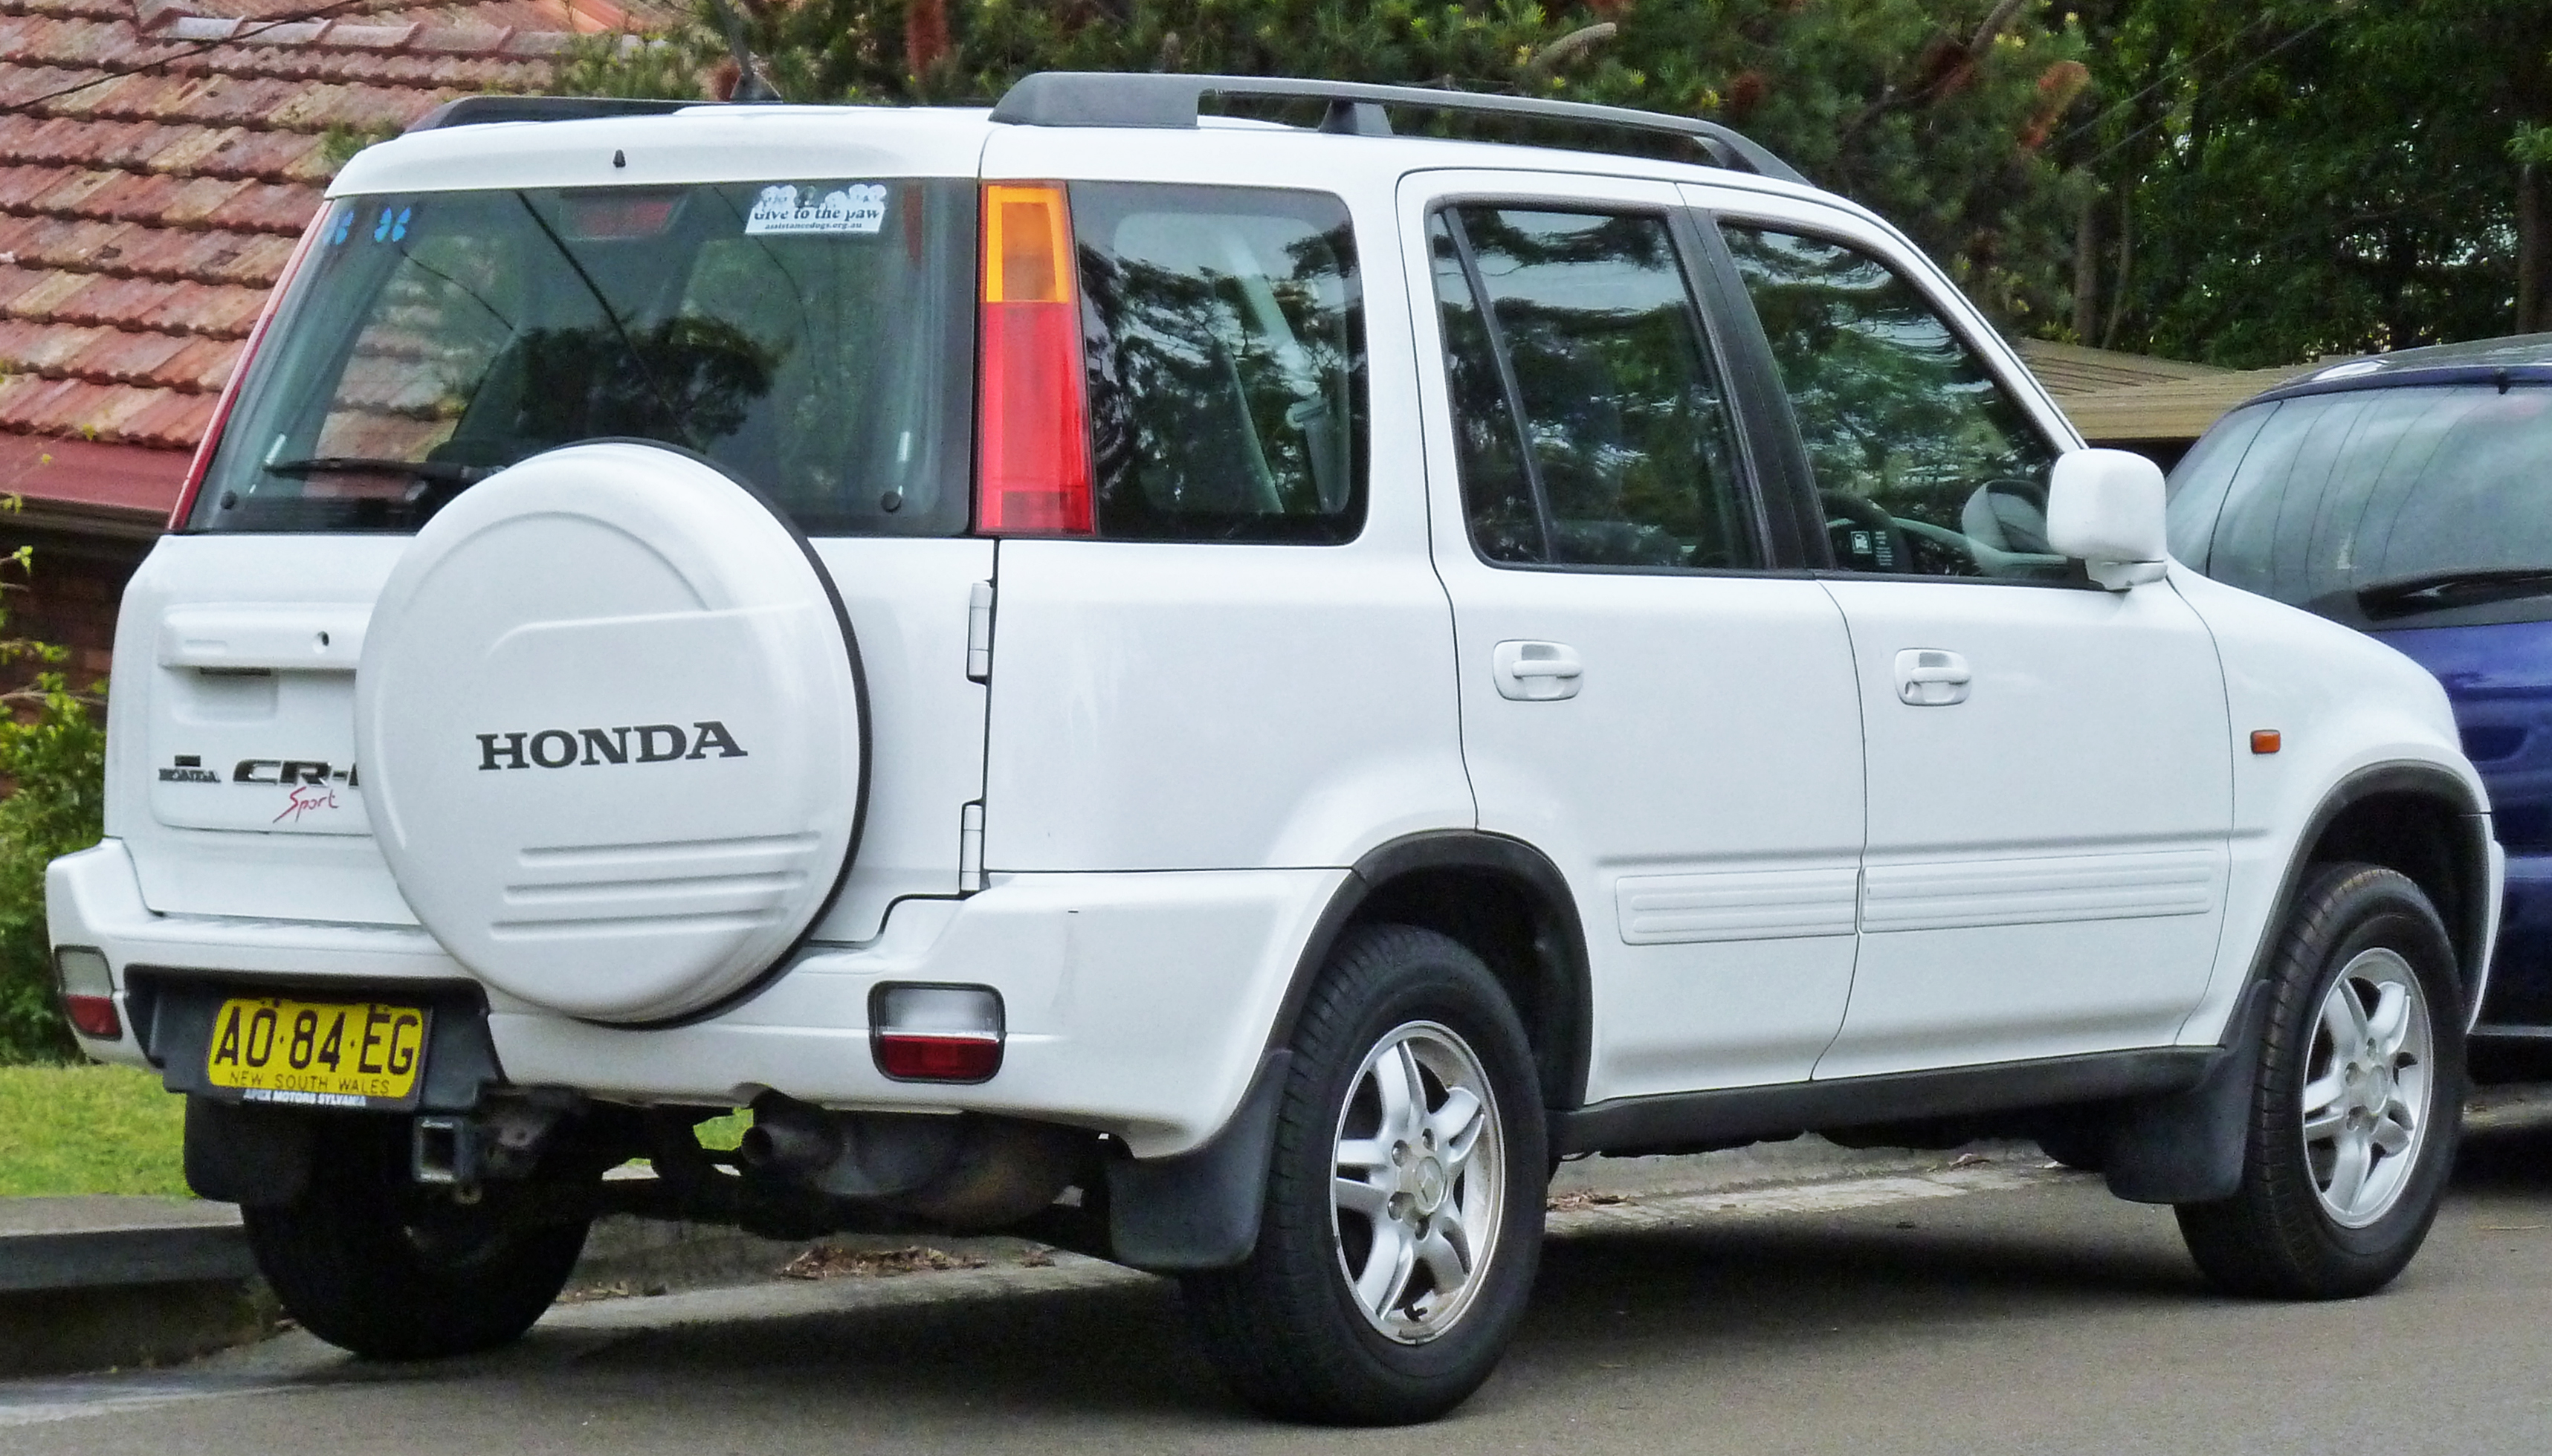 Хонда црв 2000 года. Honda CR-V 2000. Honda CR-V 1 1999. Хонда CRV 2000. Honda CRV 2000 год.